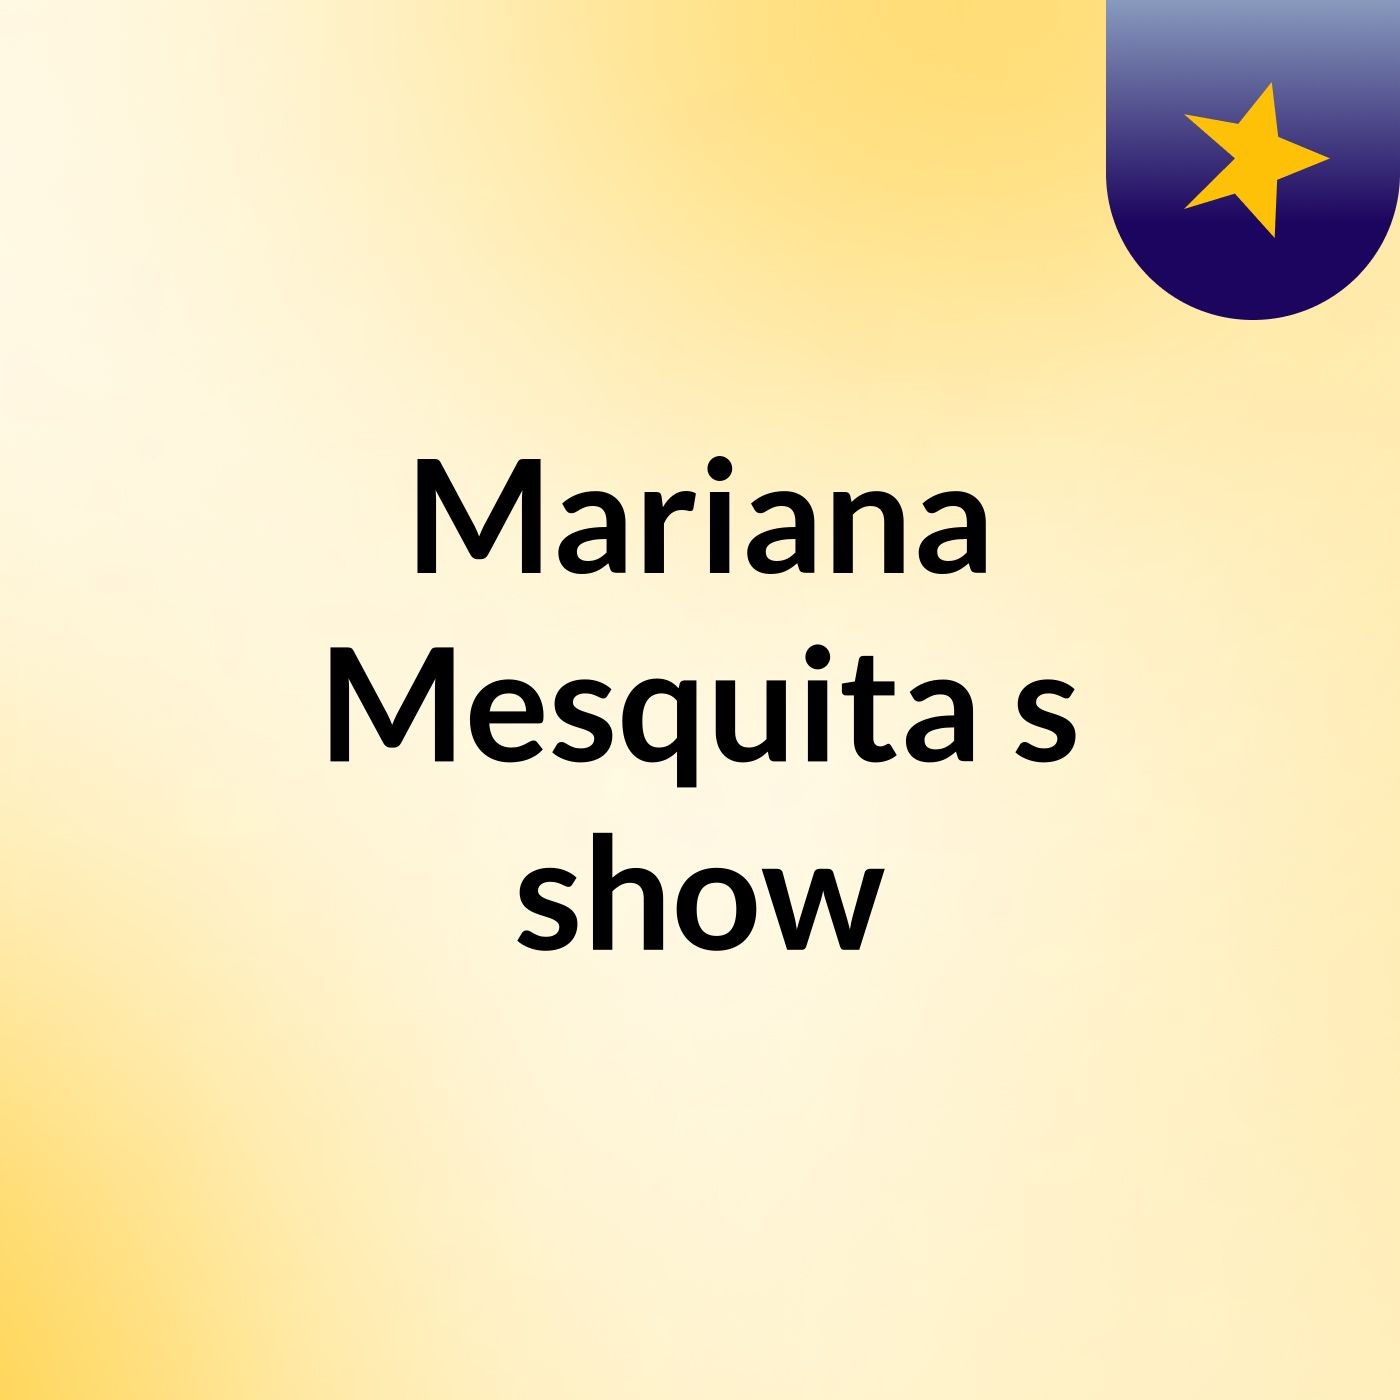 Mariana Mesquita's show